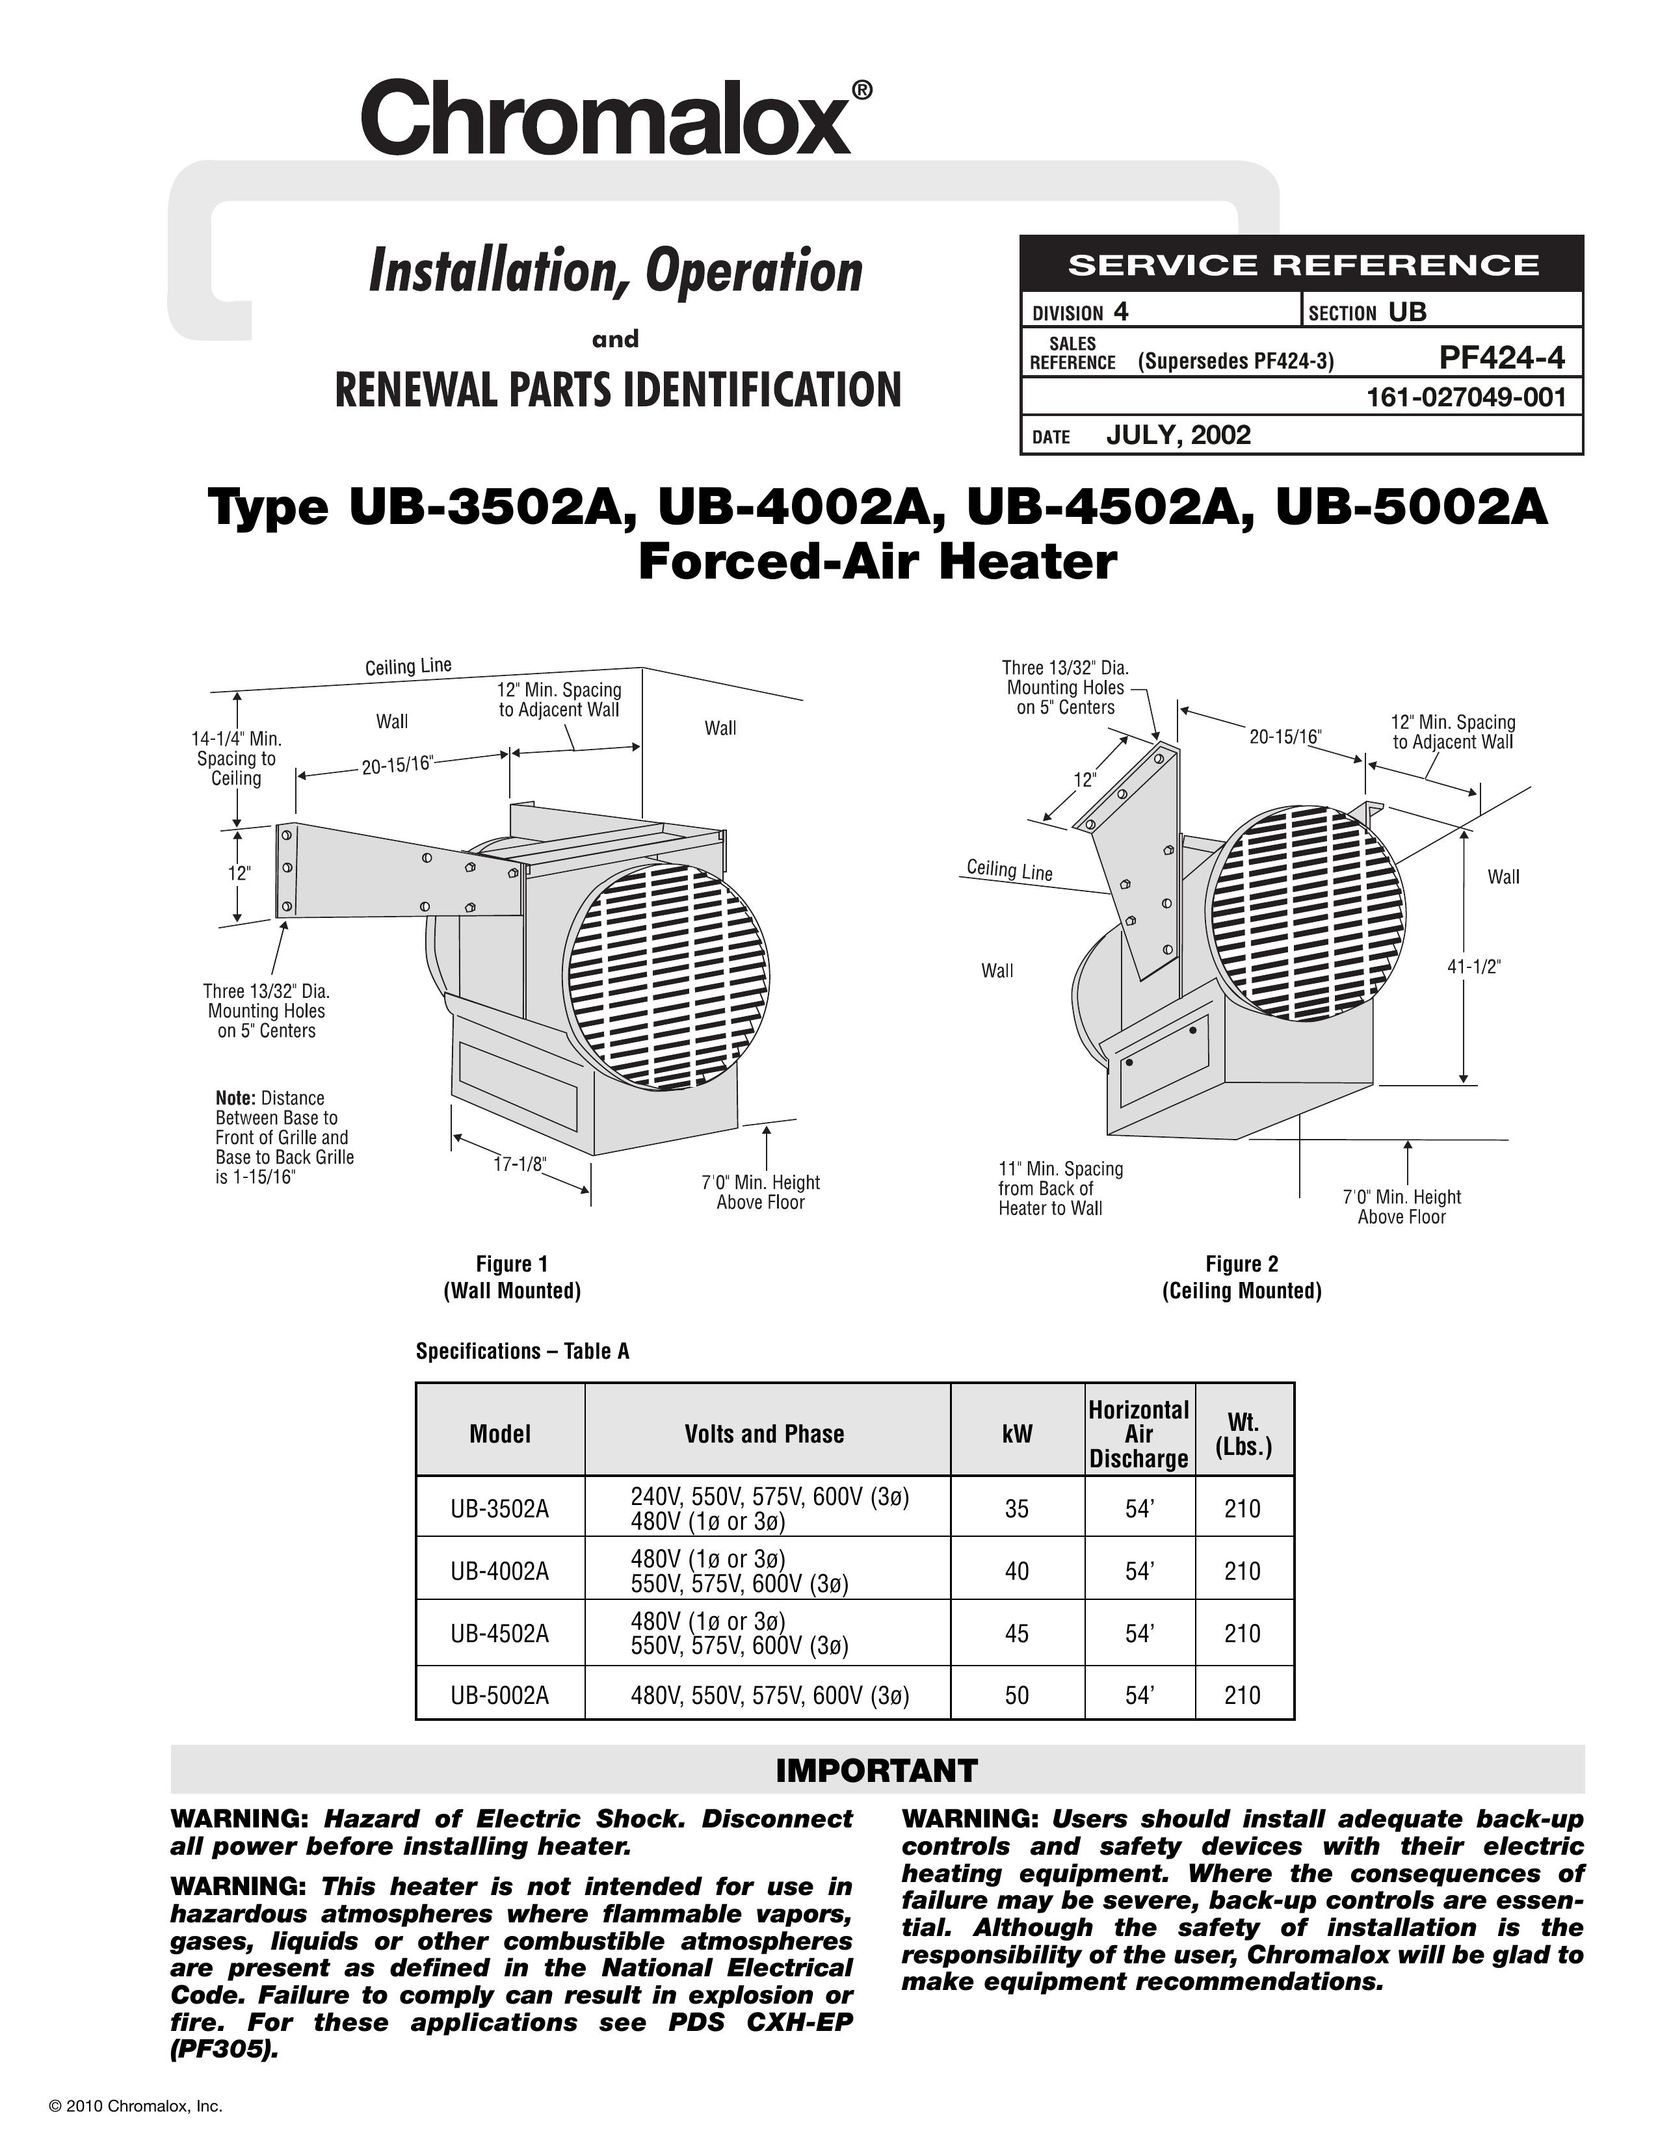 Chromalox UB-3502A Air Conditioner User Manual